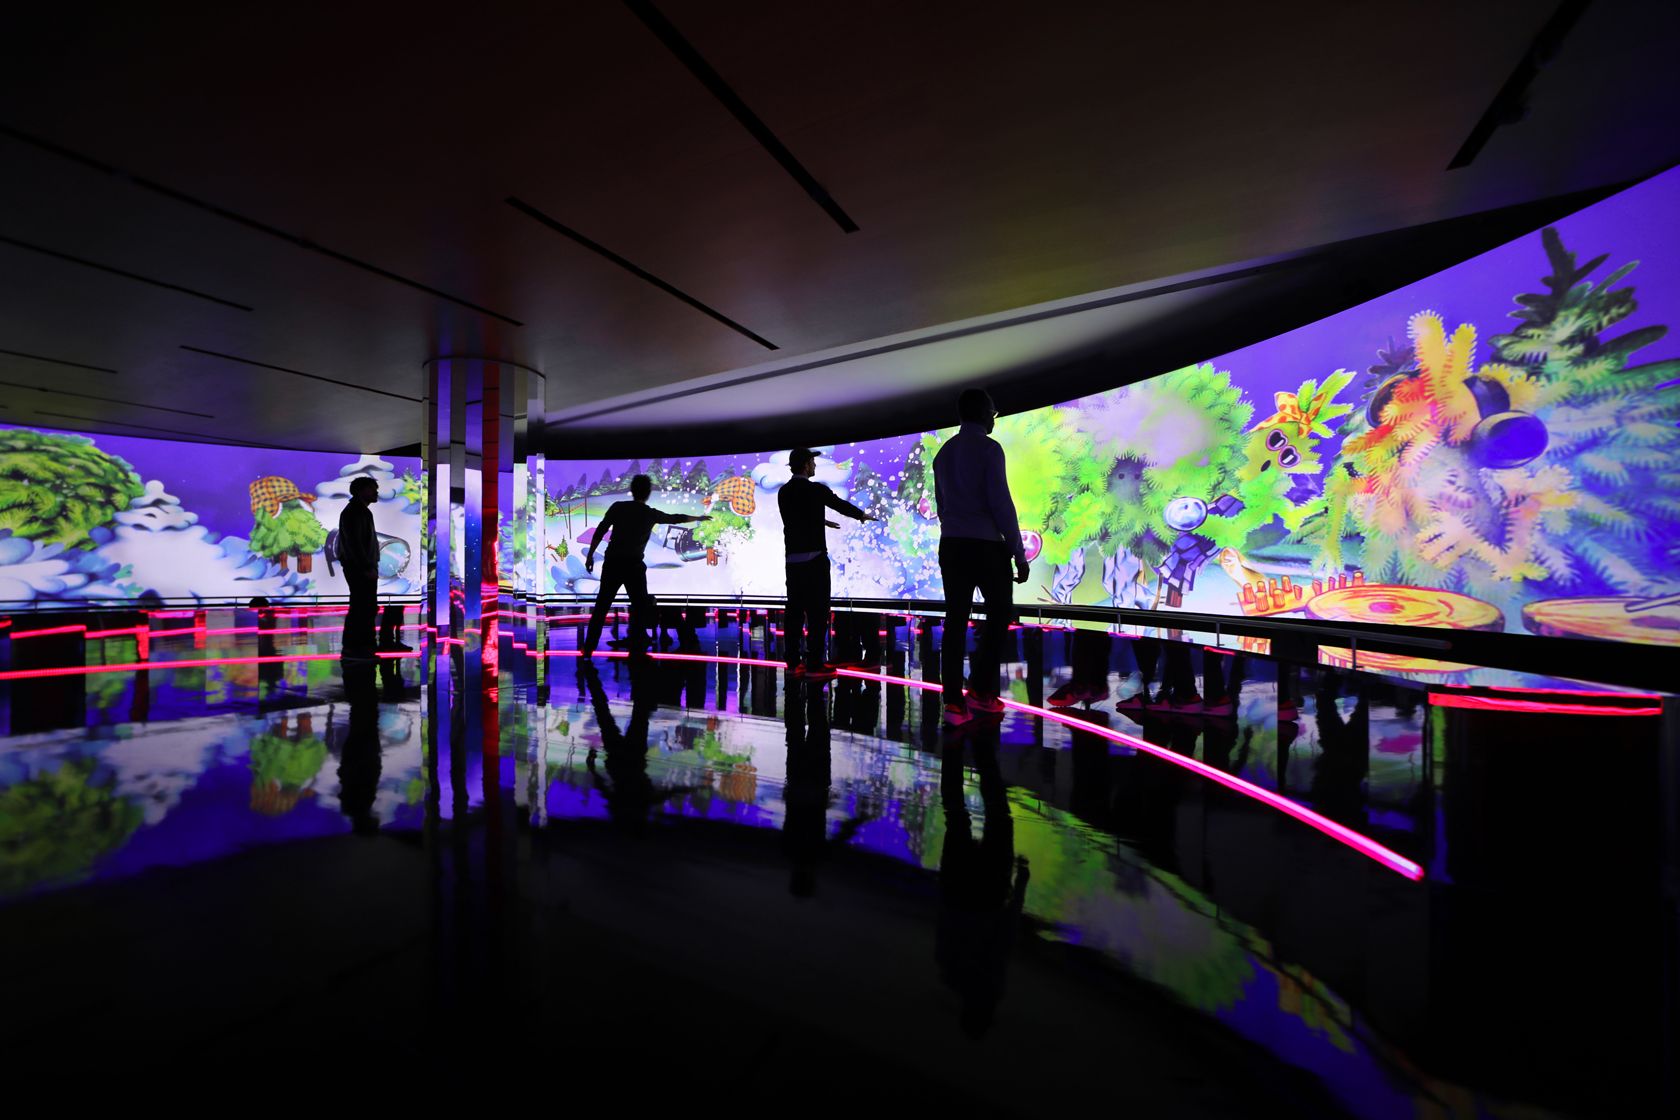 Interactive experience galeries-lafayette - EYS installation